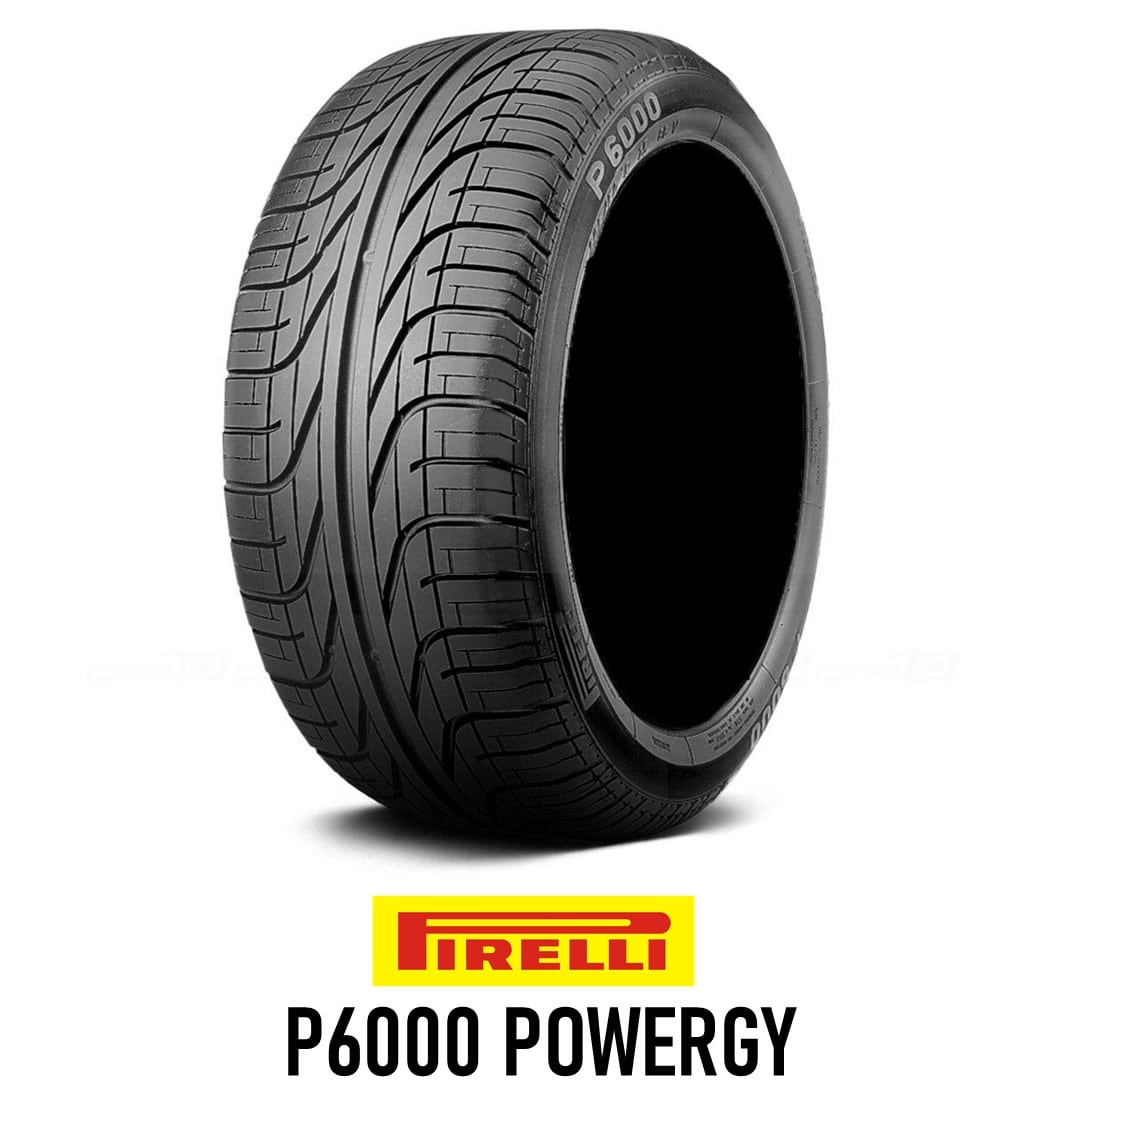 Pirelli 215 65 r16 купить. Pirelli Powergy 215/55 r17. Pirelli p6000. Pirelli Powergy 215/60 r17. P6000 Powergy.